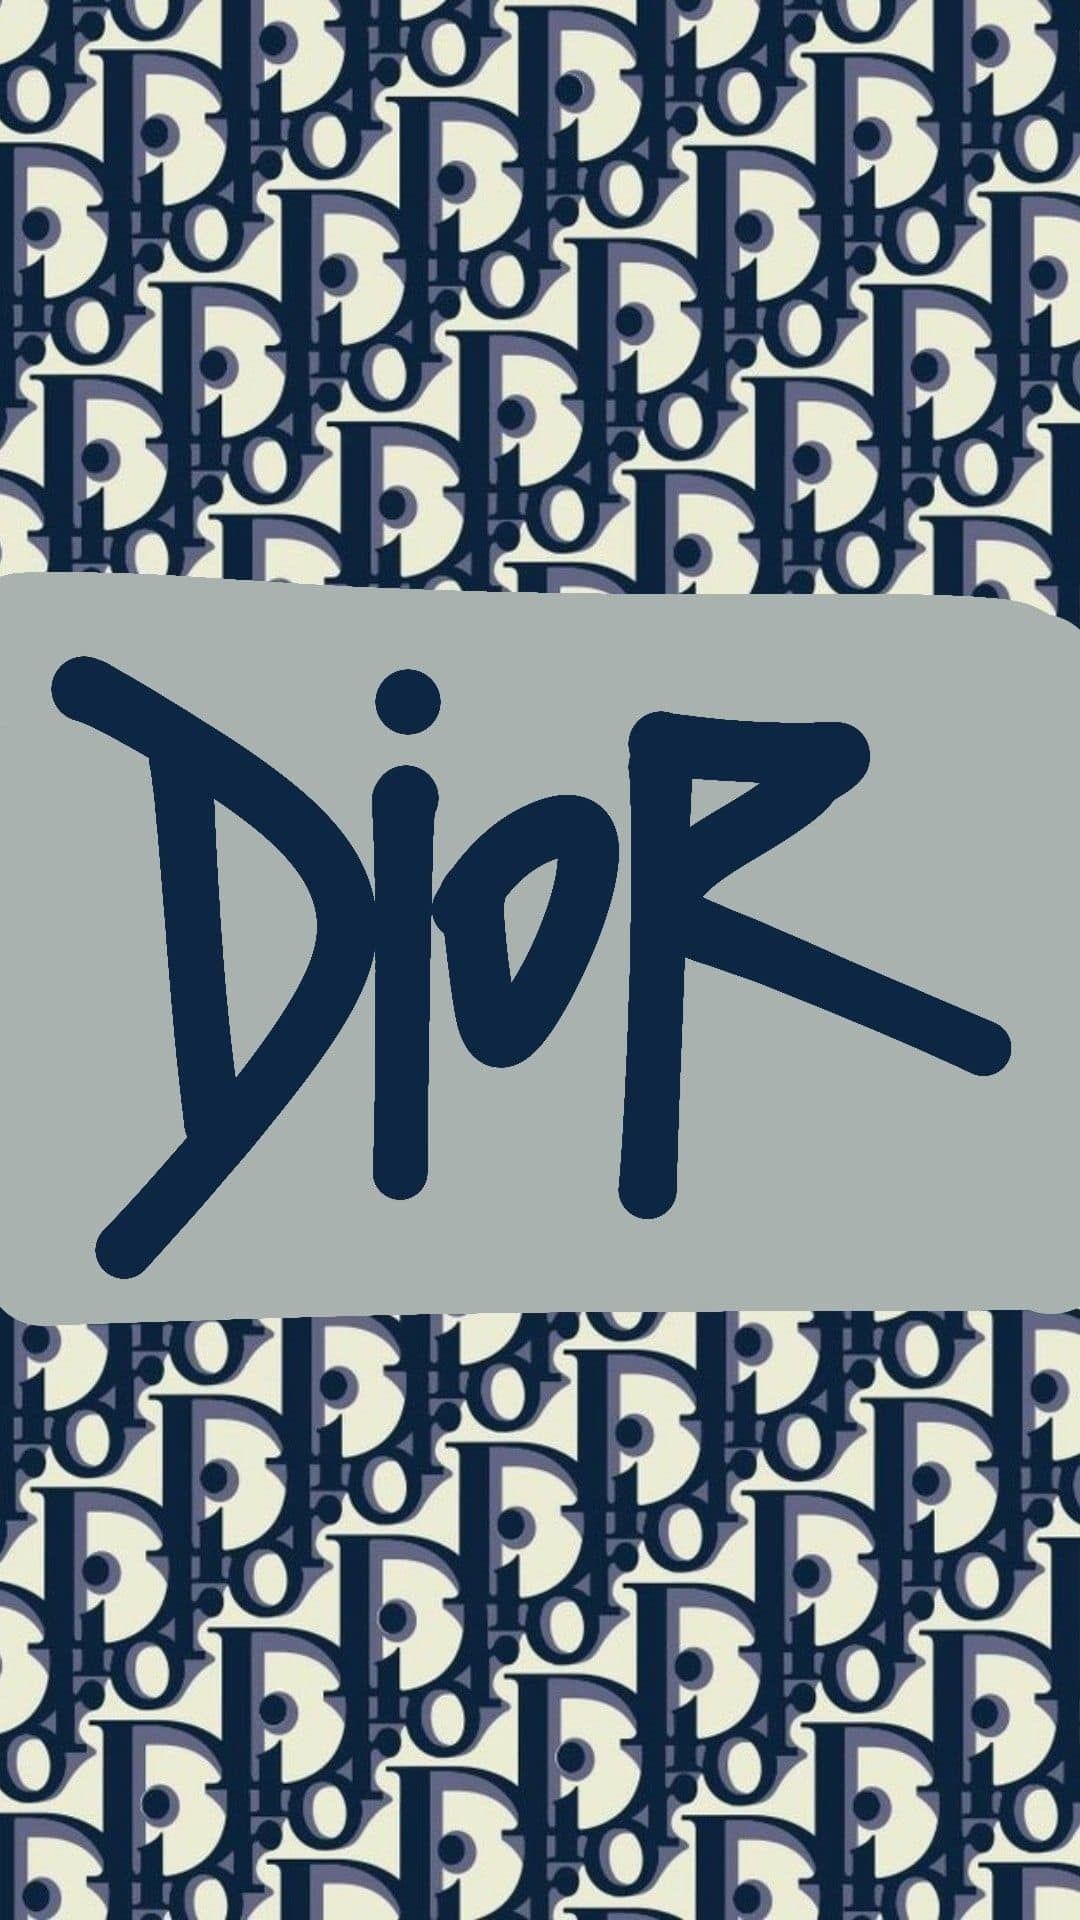 4K Dior Wallpaper Explore more Bernard Arnault, Brand, Christian Dior, Dior, Famous wallpaper.. Dior wallpaper, iPhone wallpaper vintage, Phone wallpaper patterns